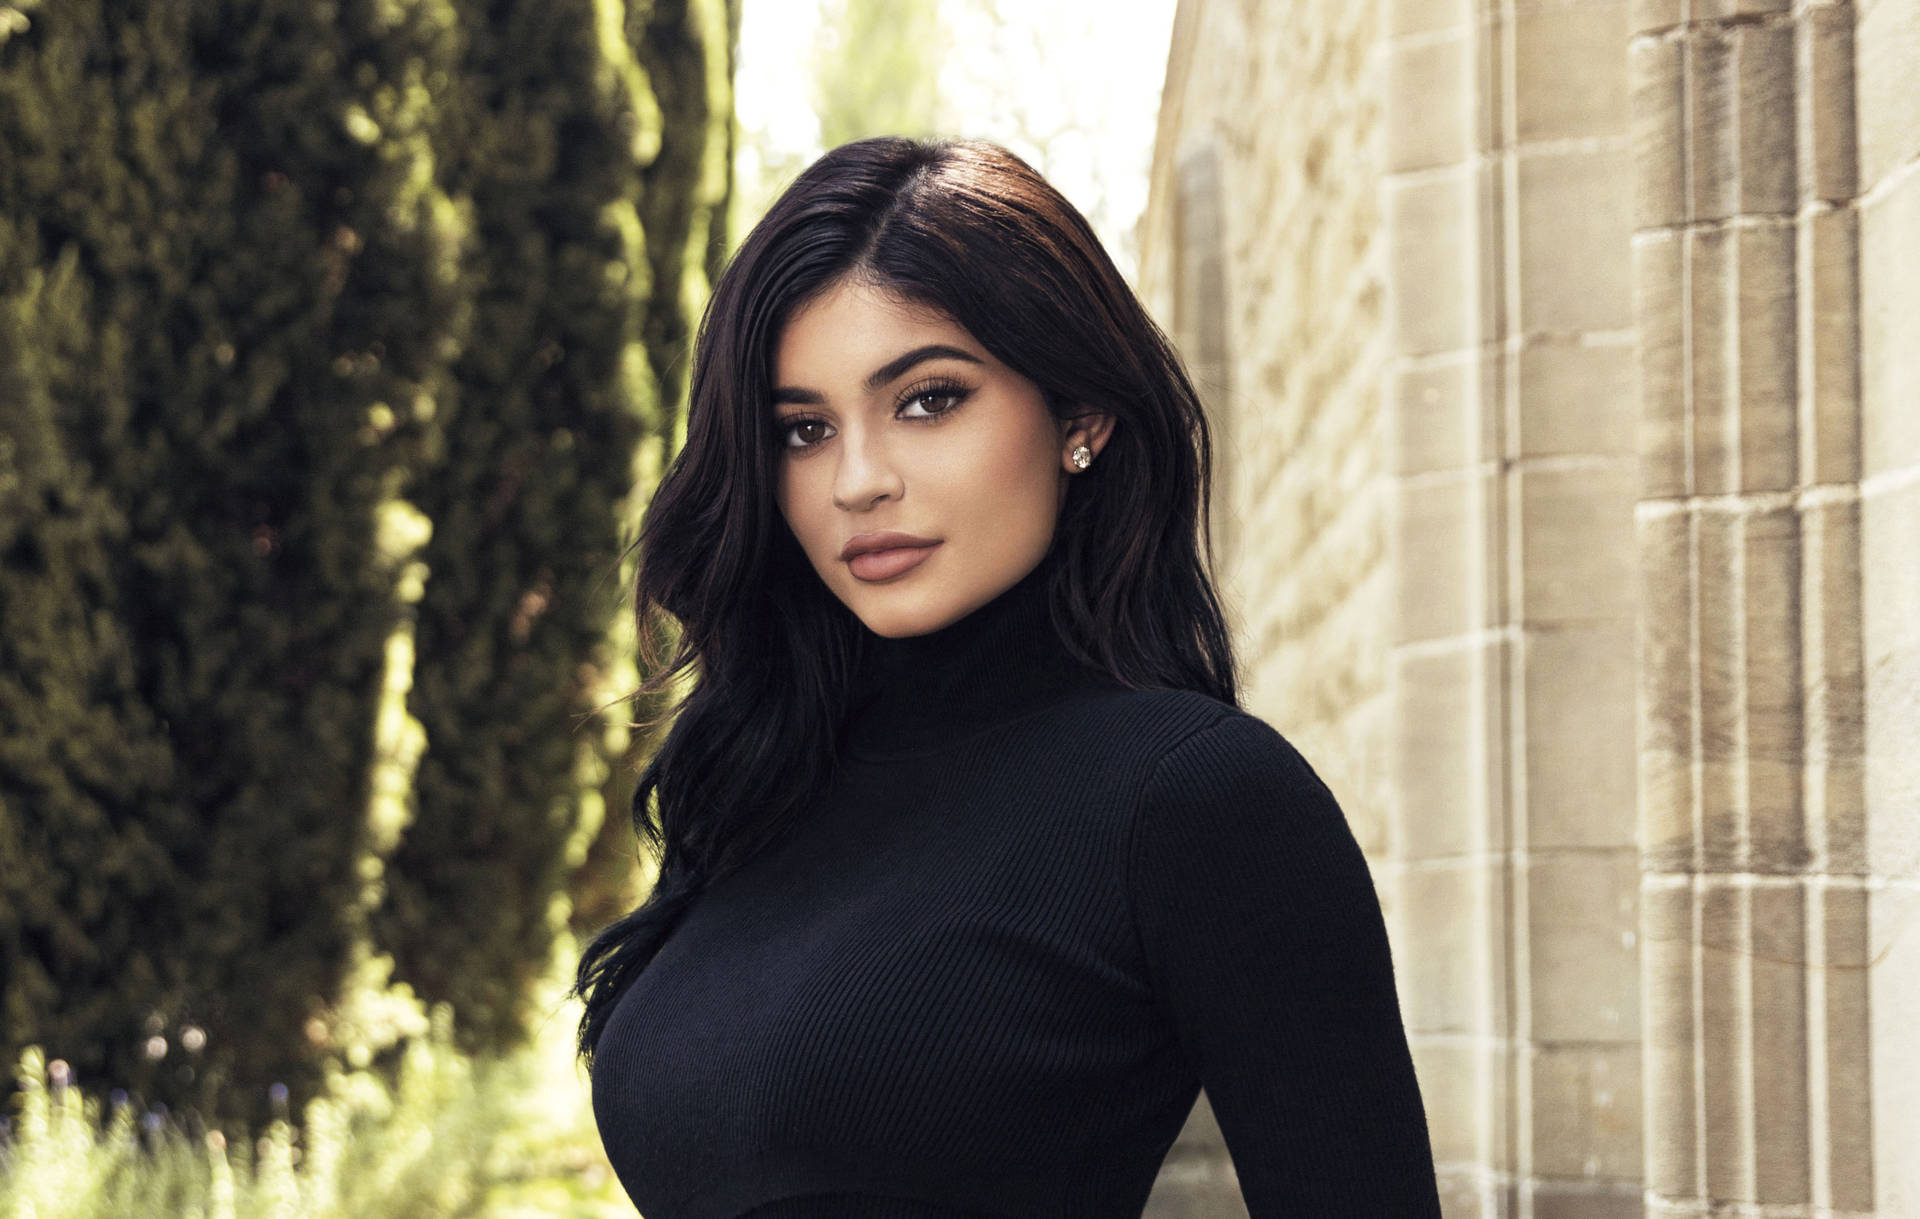 Kylie Jenner Wearing Black Top Background